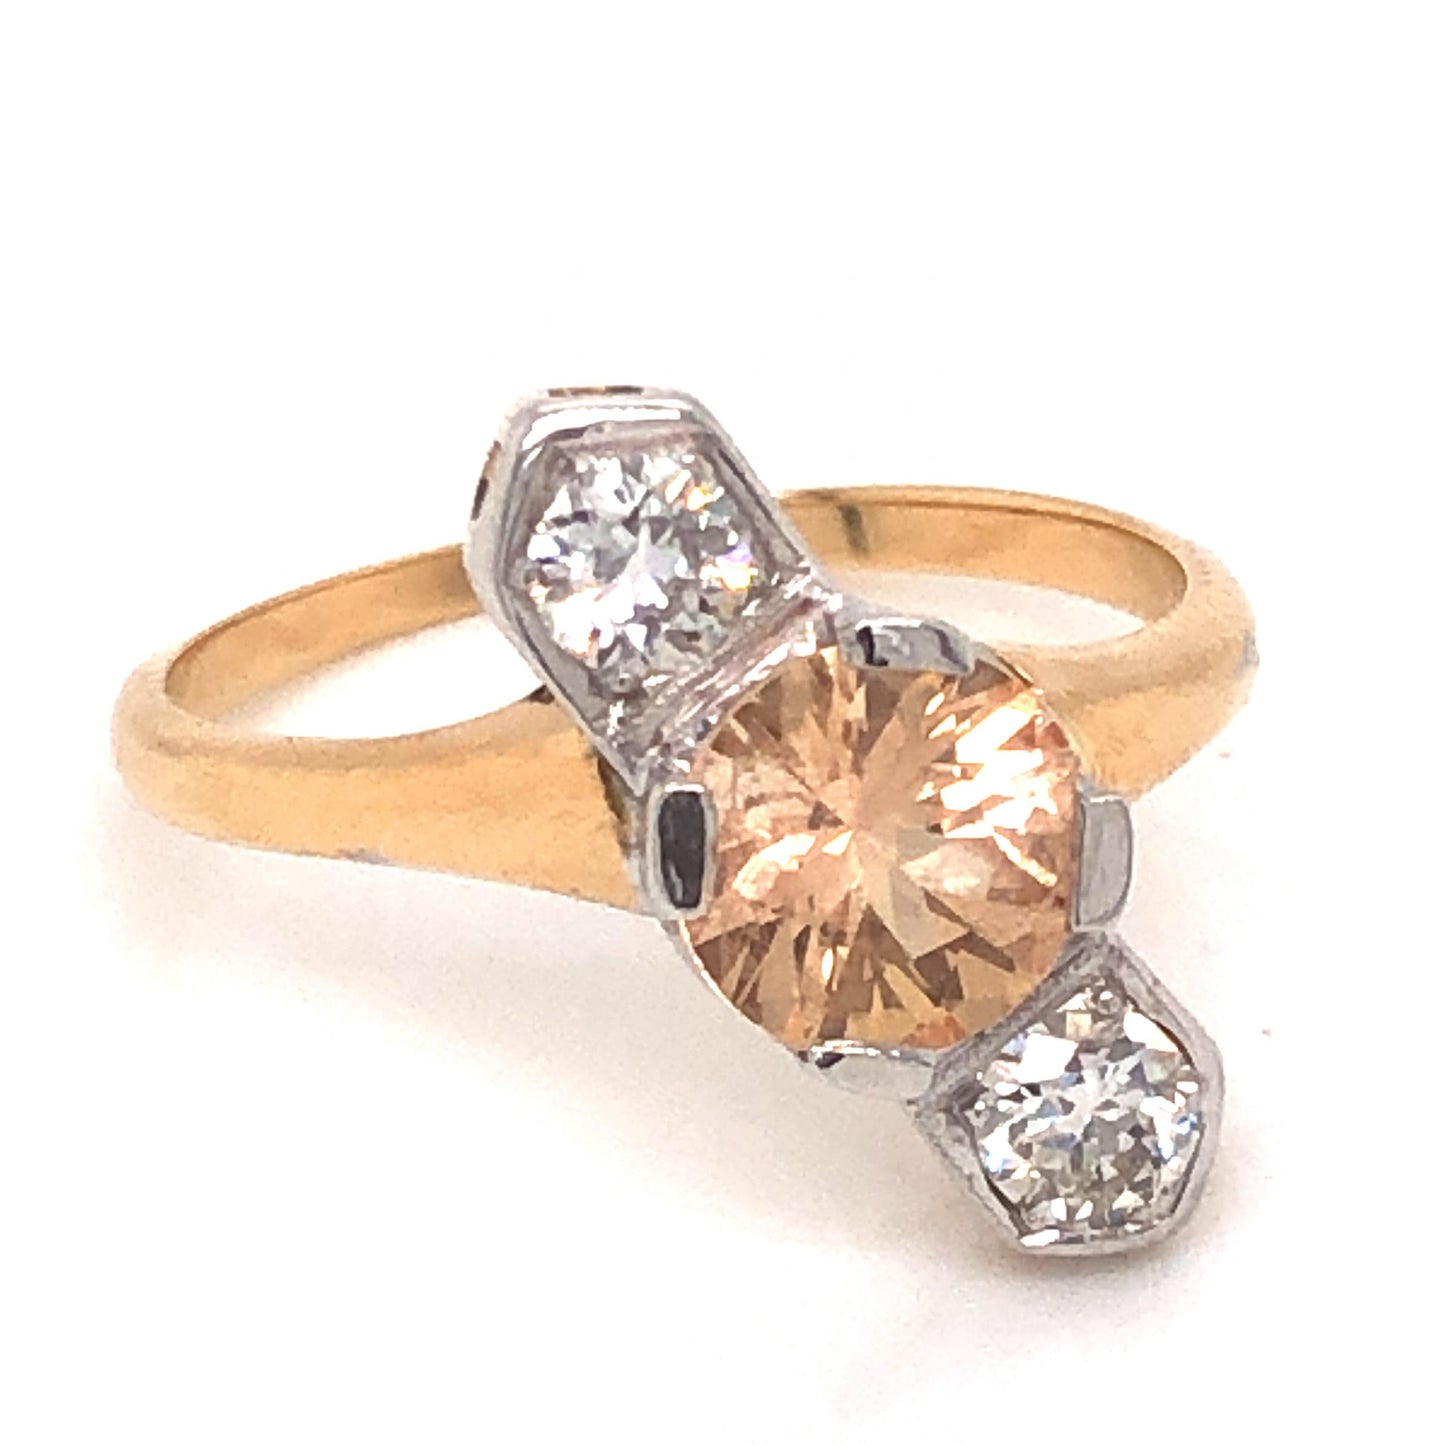 1.33 Peach Sapphire & Diamond Ring in 14k Yellow & White Gold